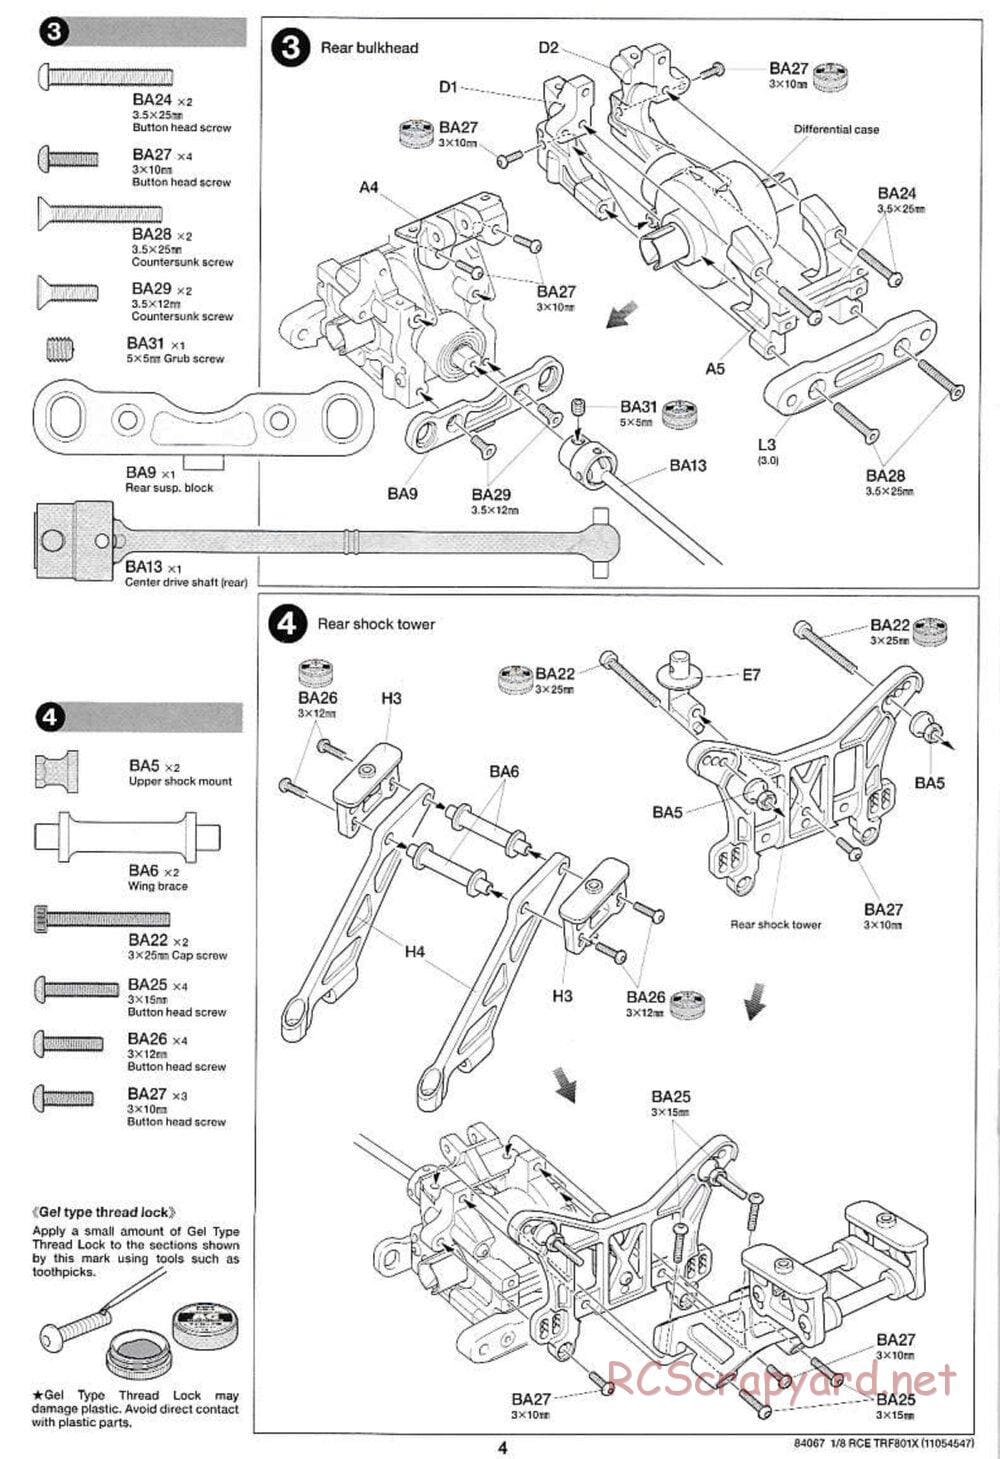 Tamiya - TRF801X Chassis - Manual - Page 4